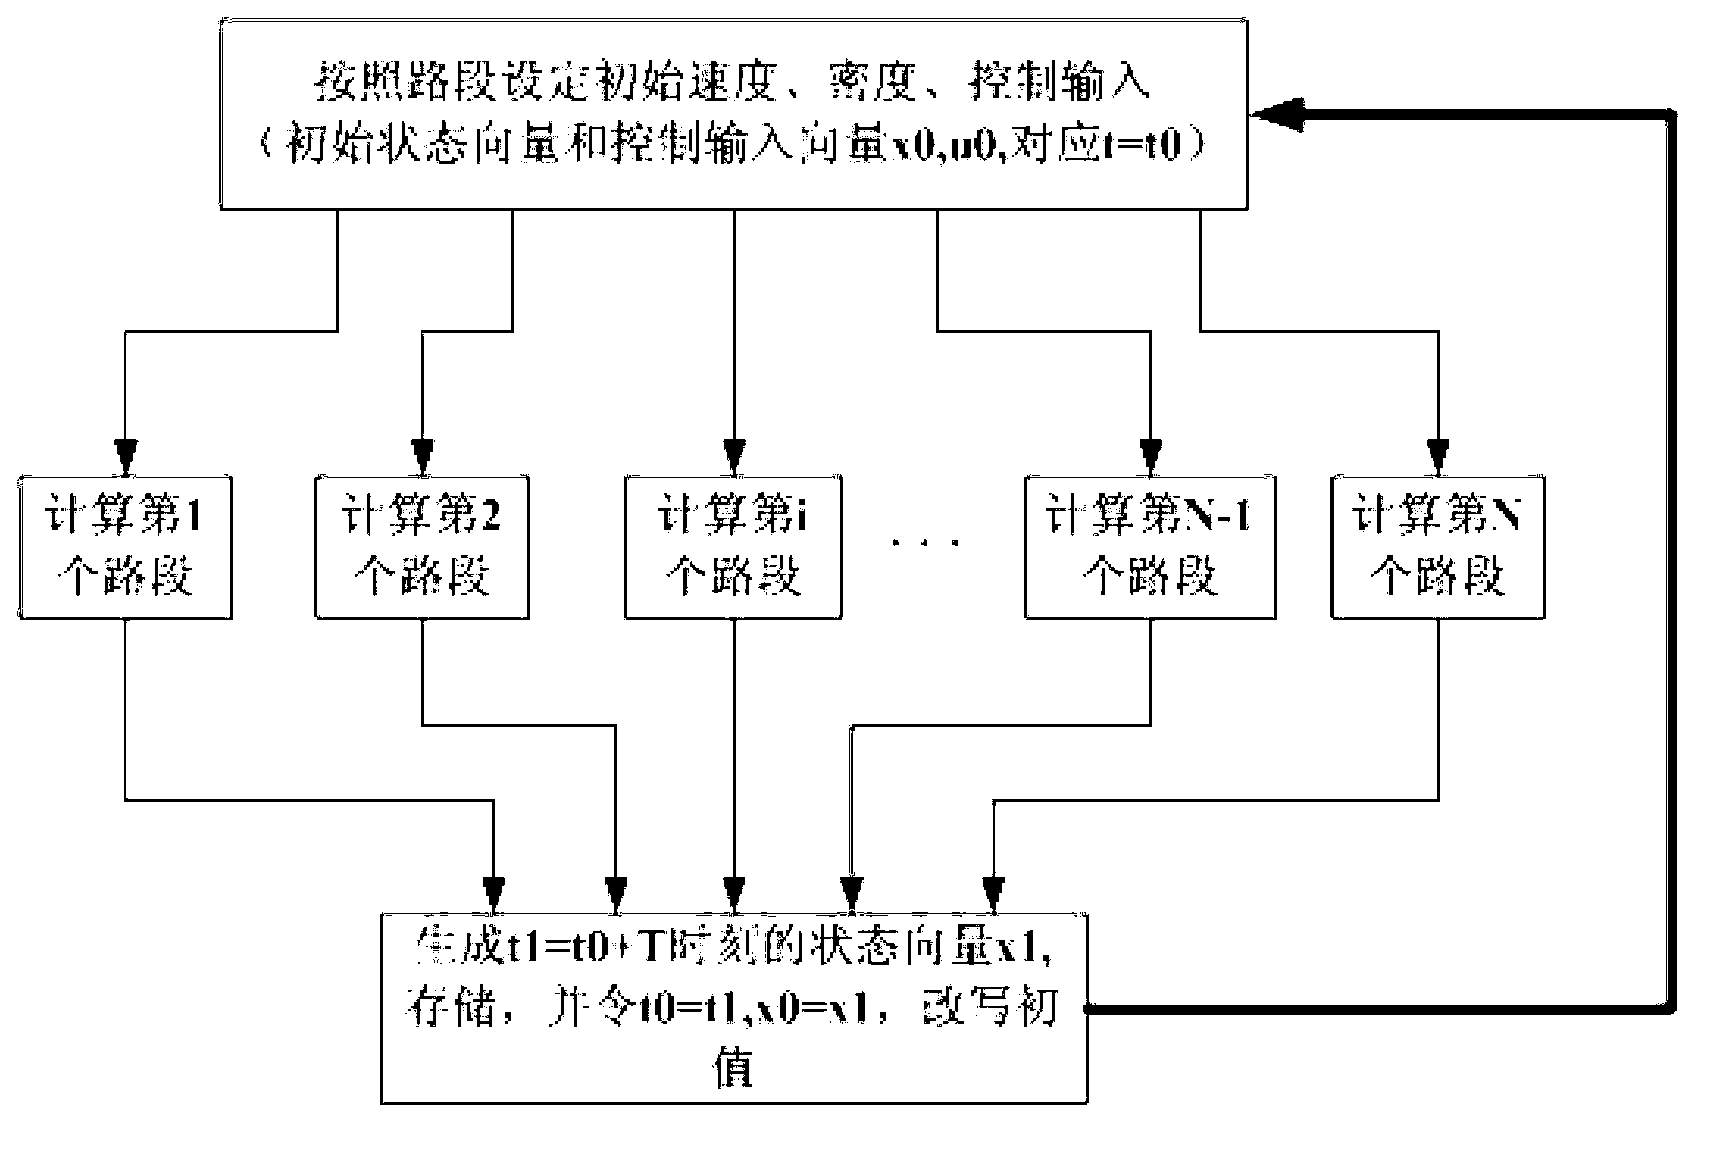 FPGA (Field Programmable Gate Array) online predication control method based on Kerner-Konhauser macroscopic traffic flow model